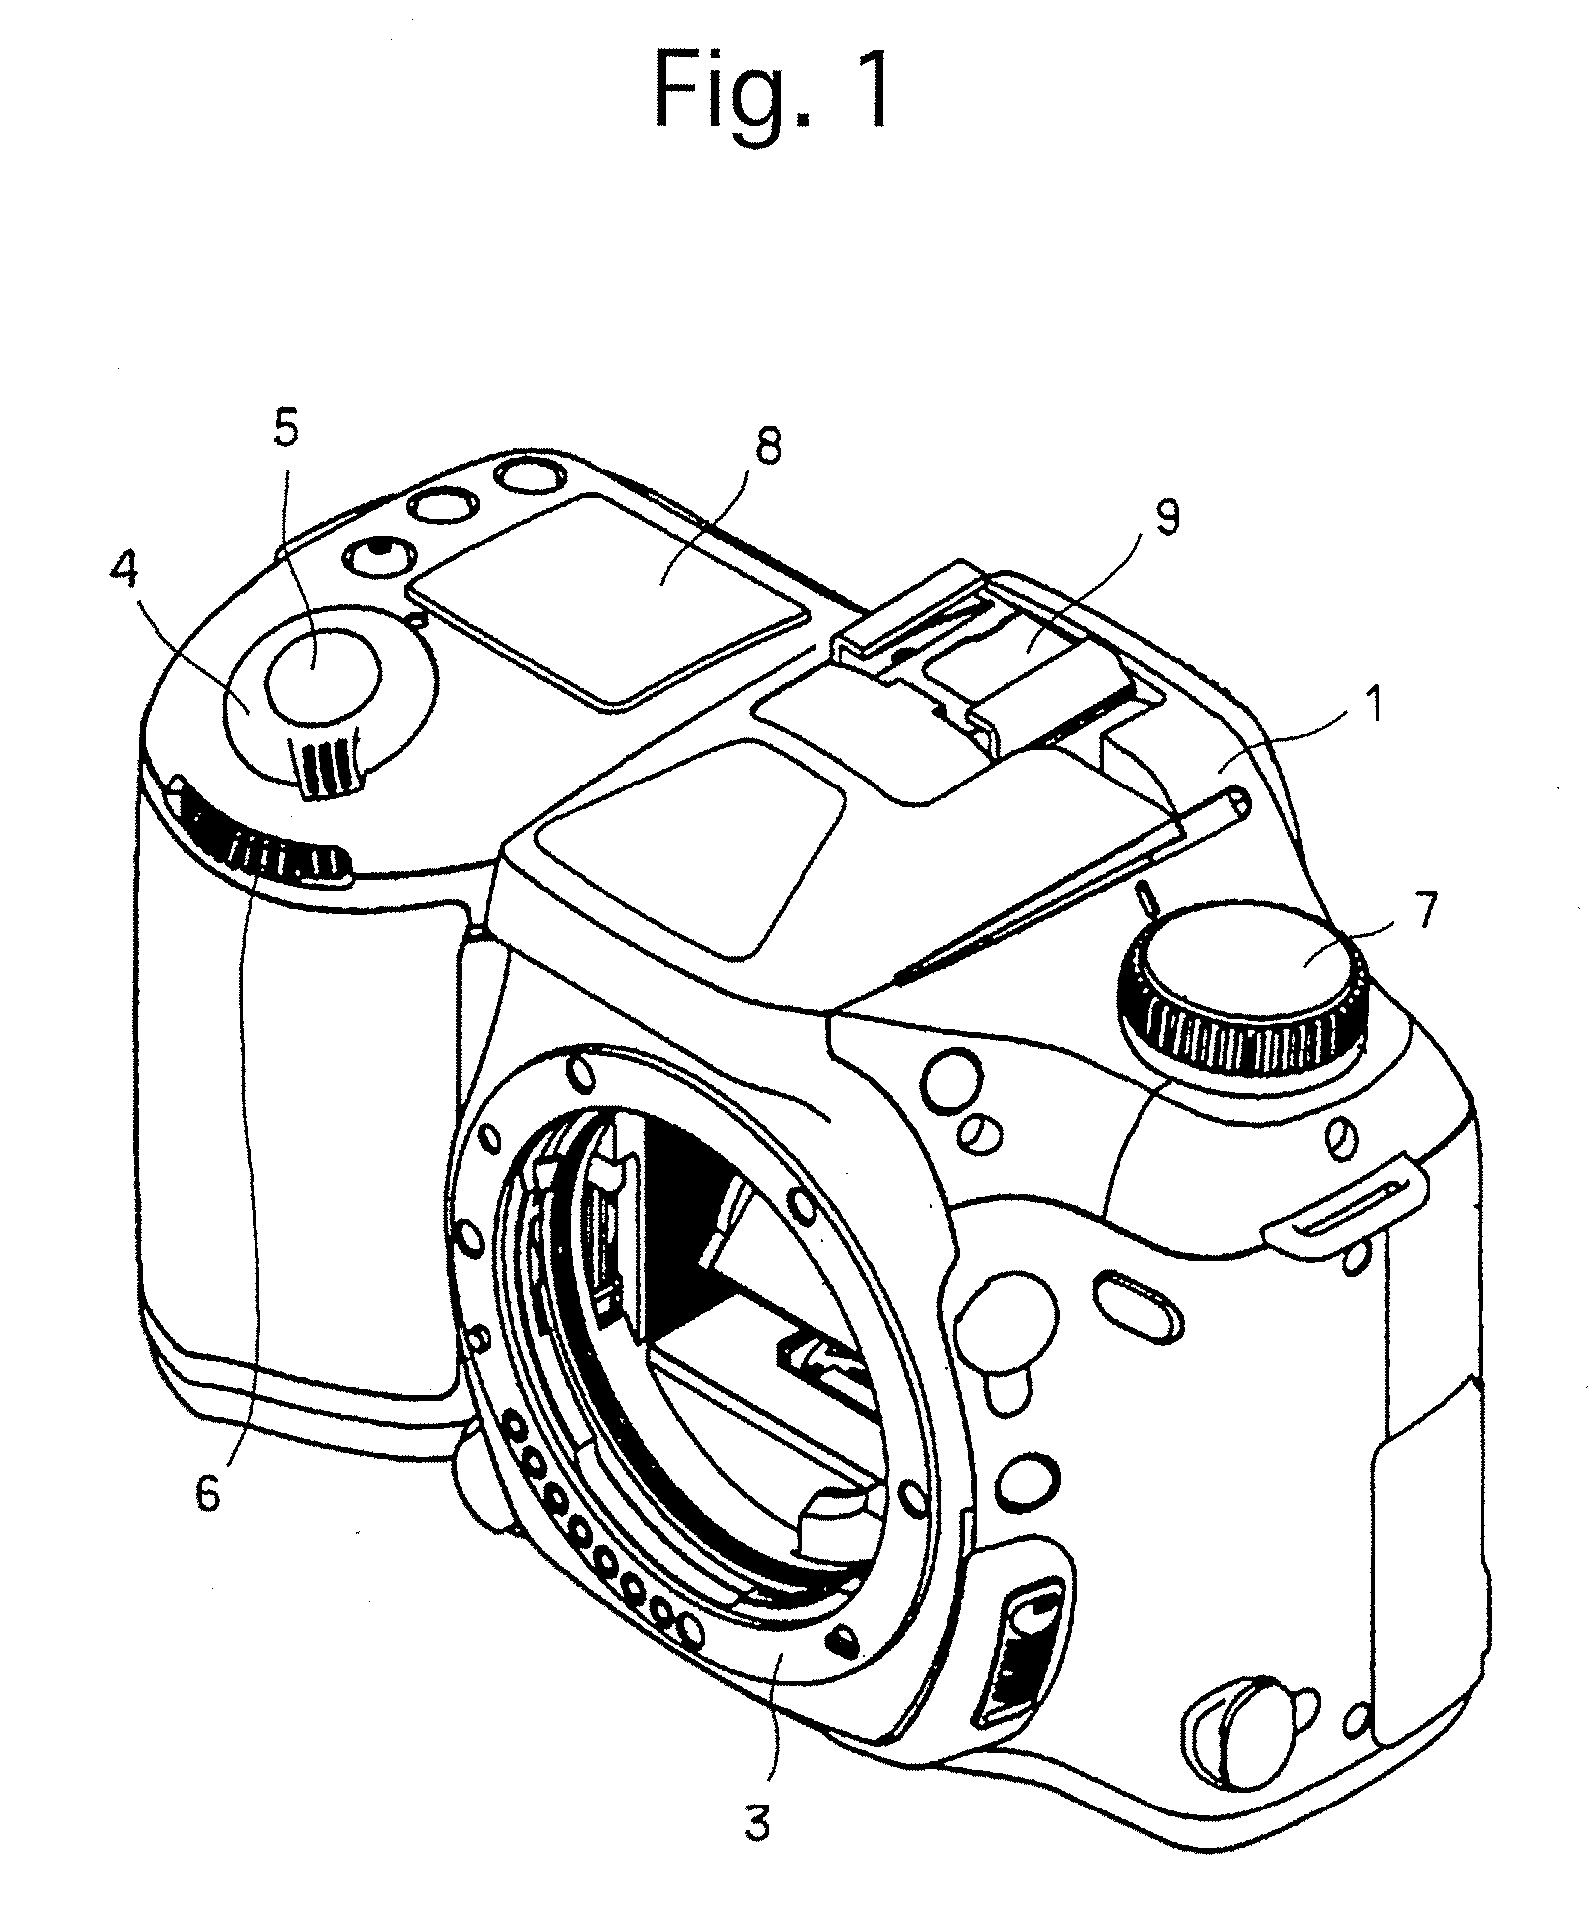 Single-lens-reflex digital camera